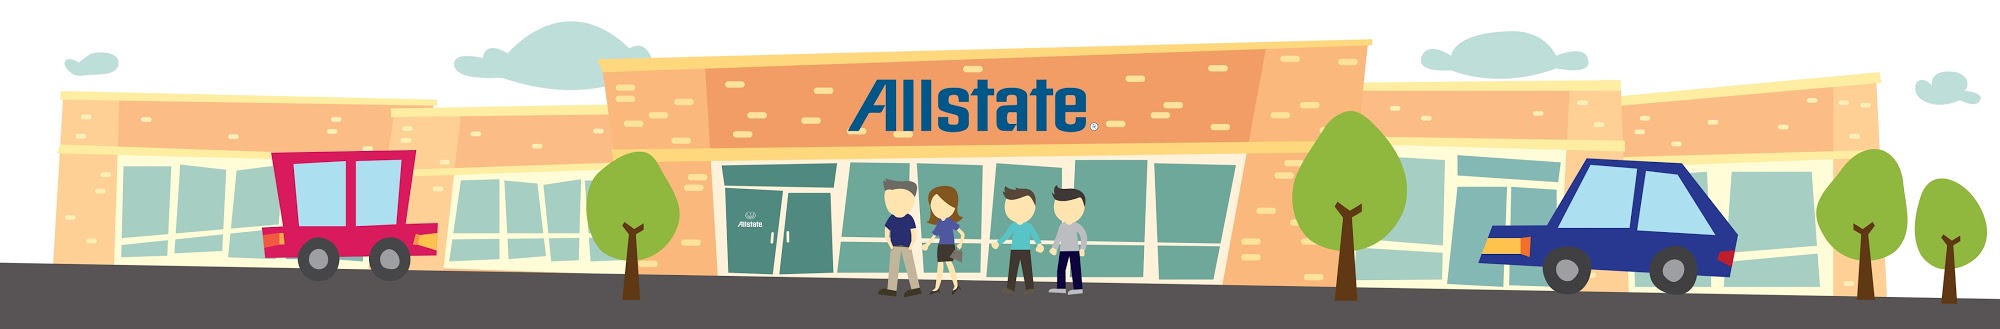 Michael Angles: Allstate Insurance